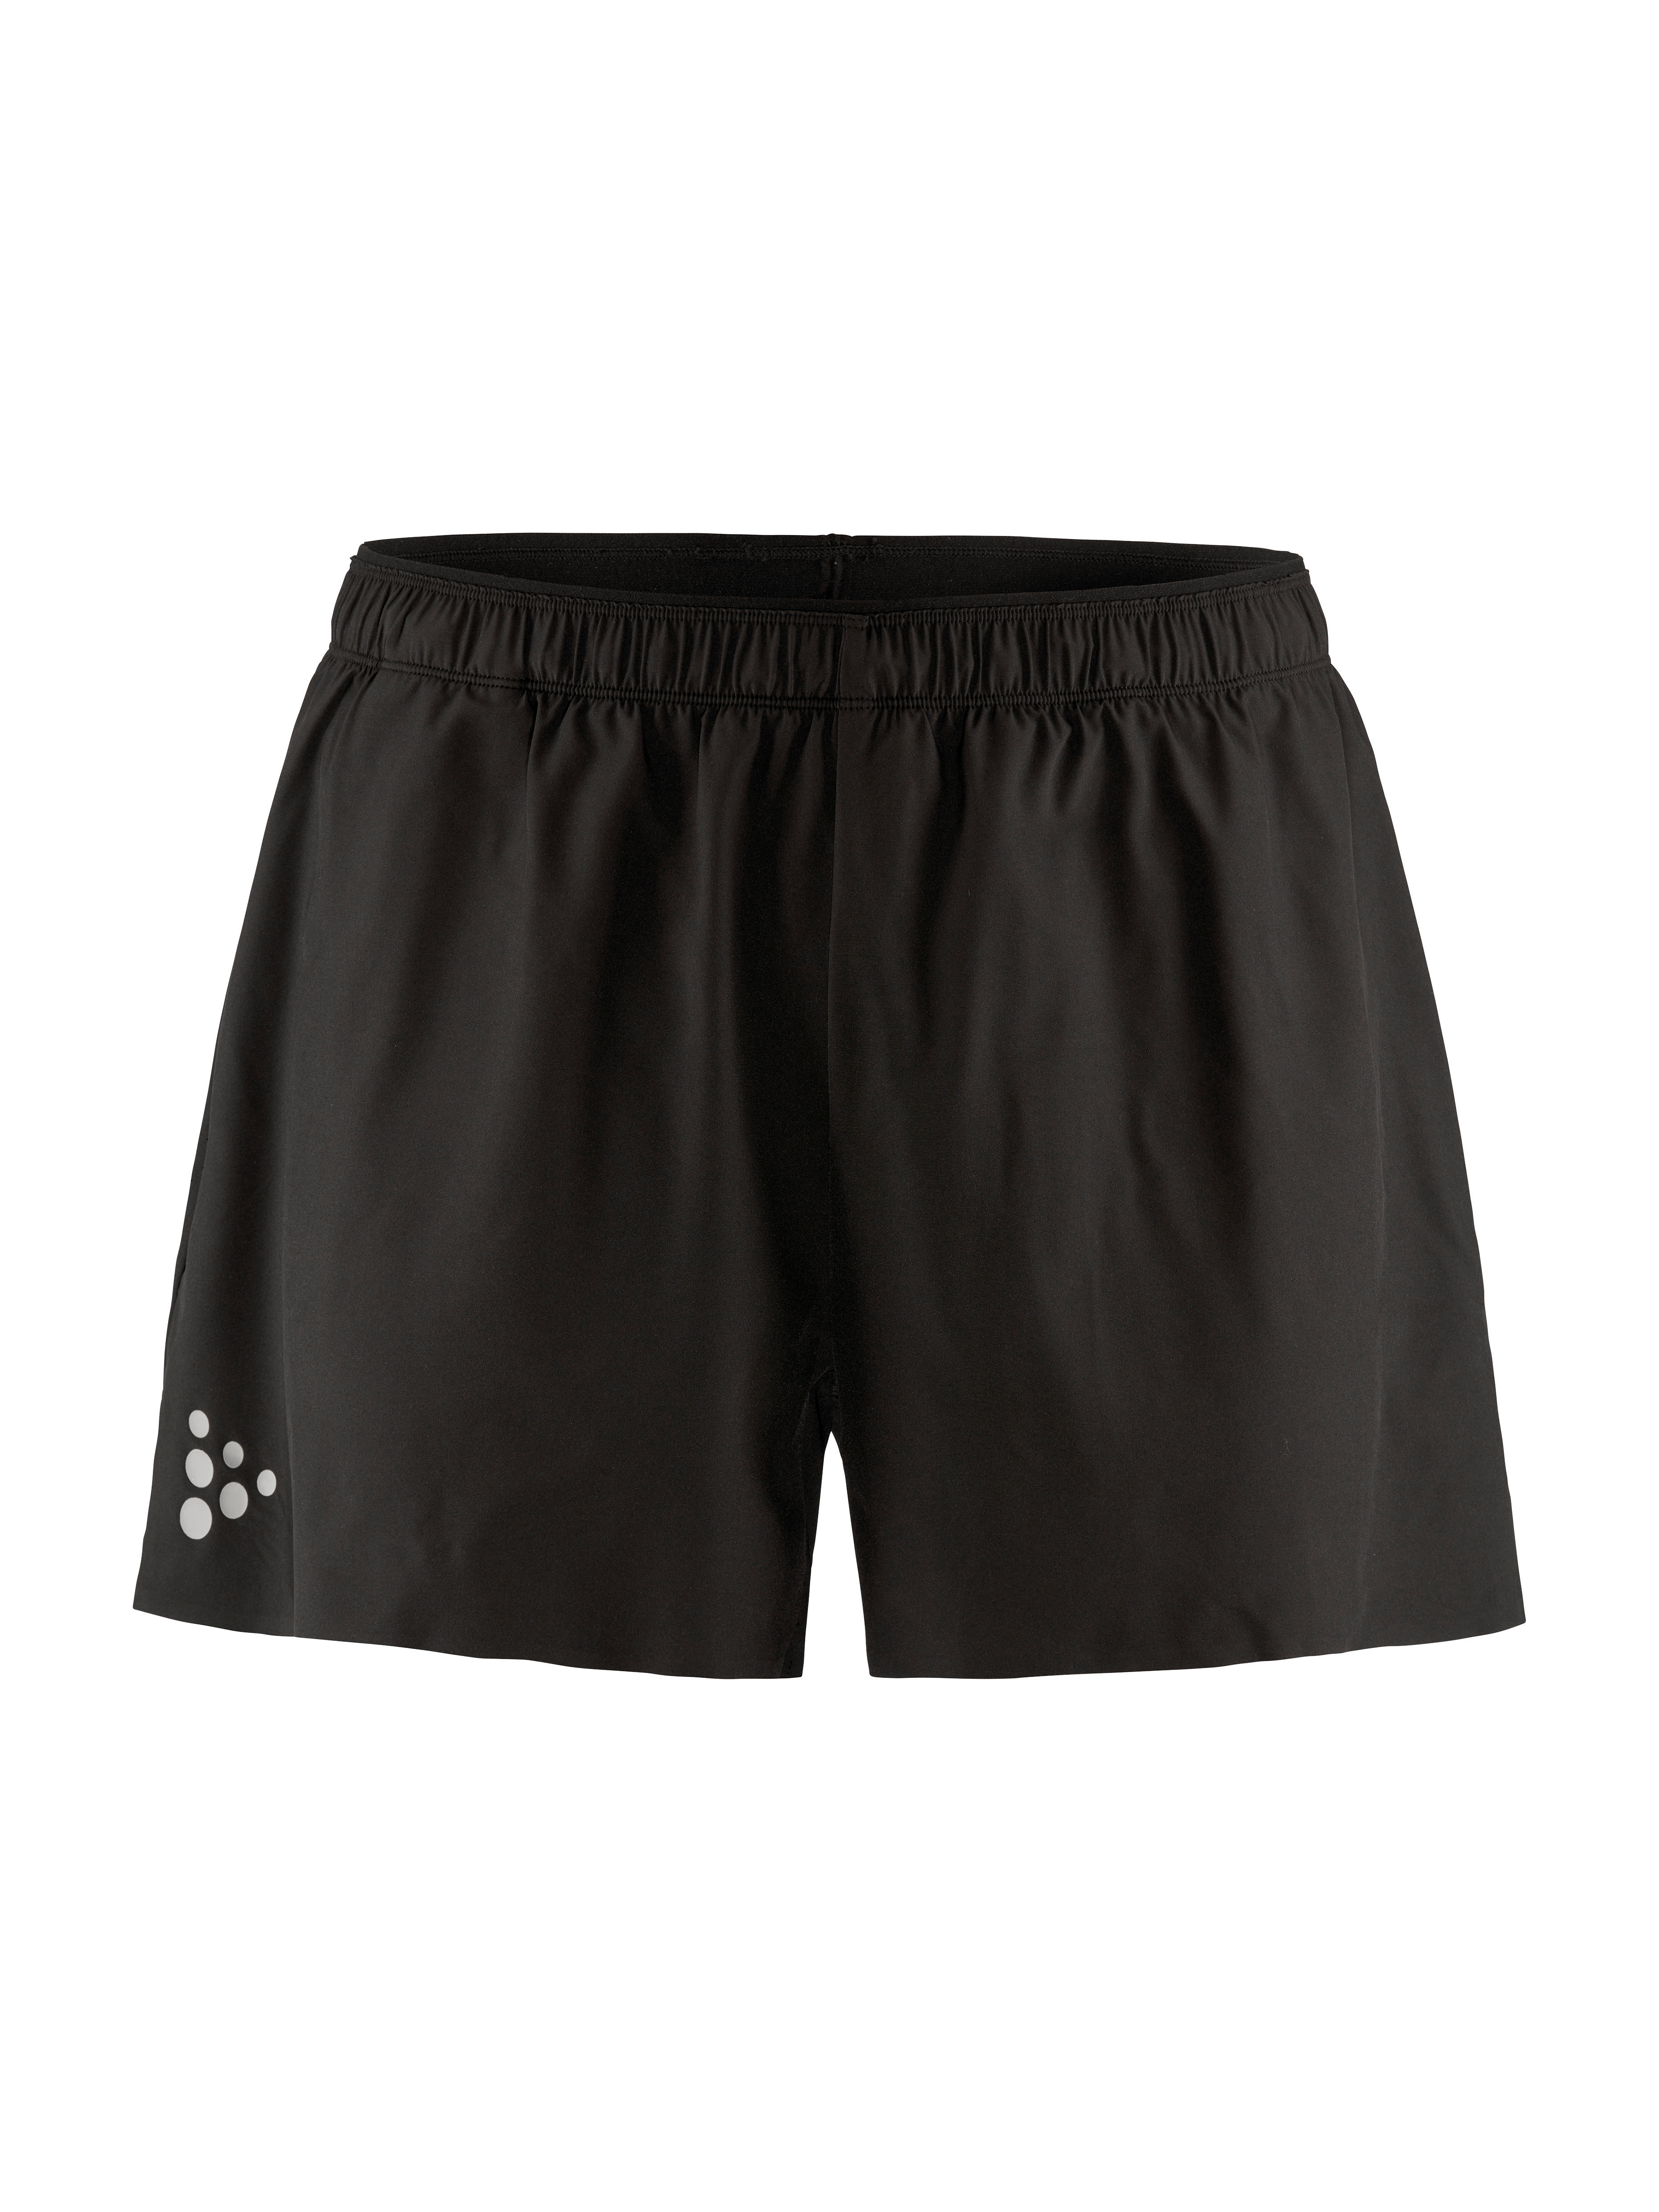 Craft Men’s Pro Hypervent 2in1 Shorts 2 Black